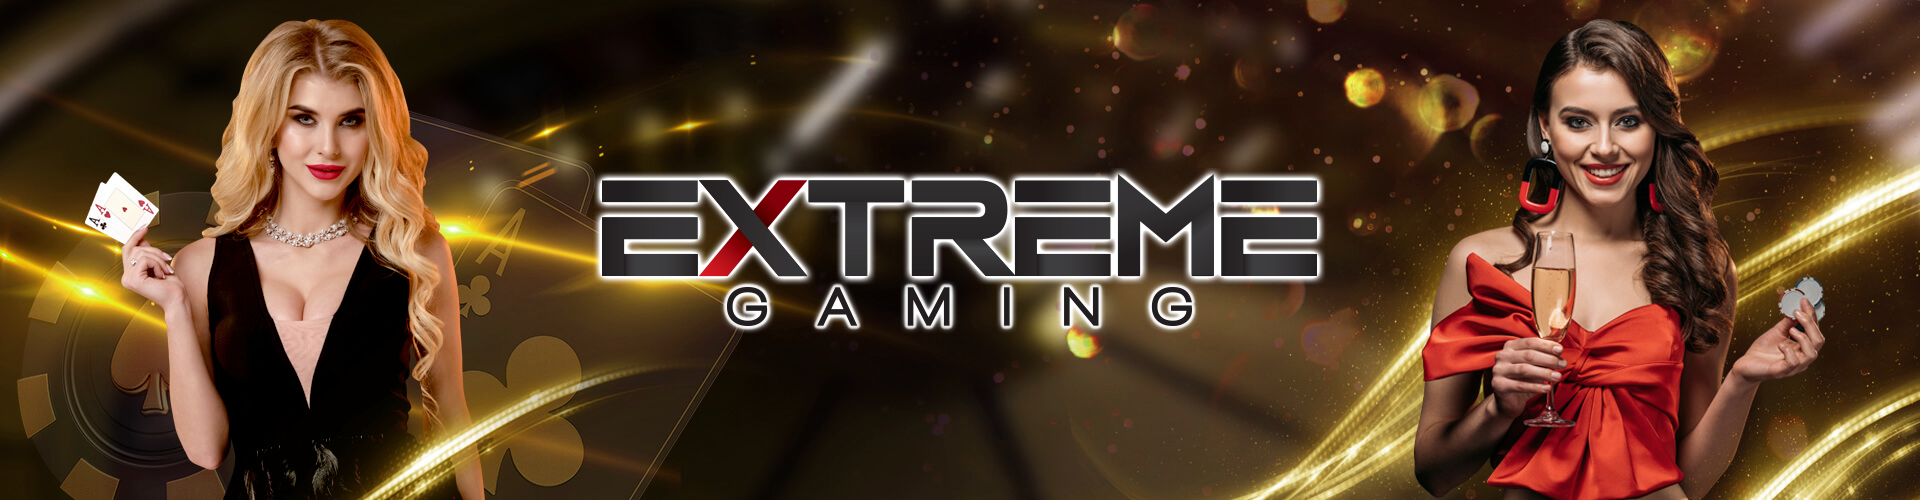 Xtreme Gaming casino